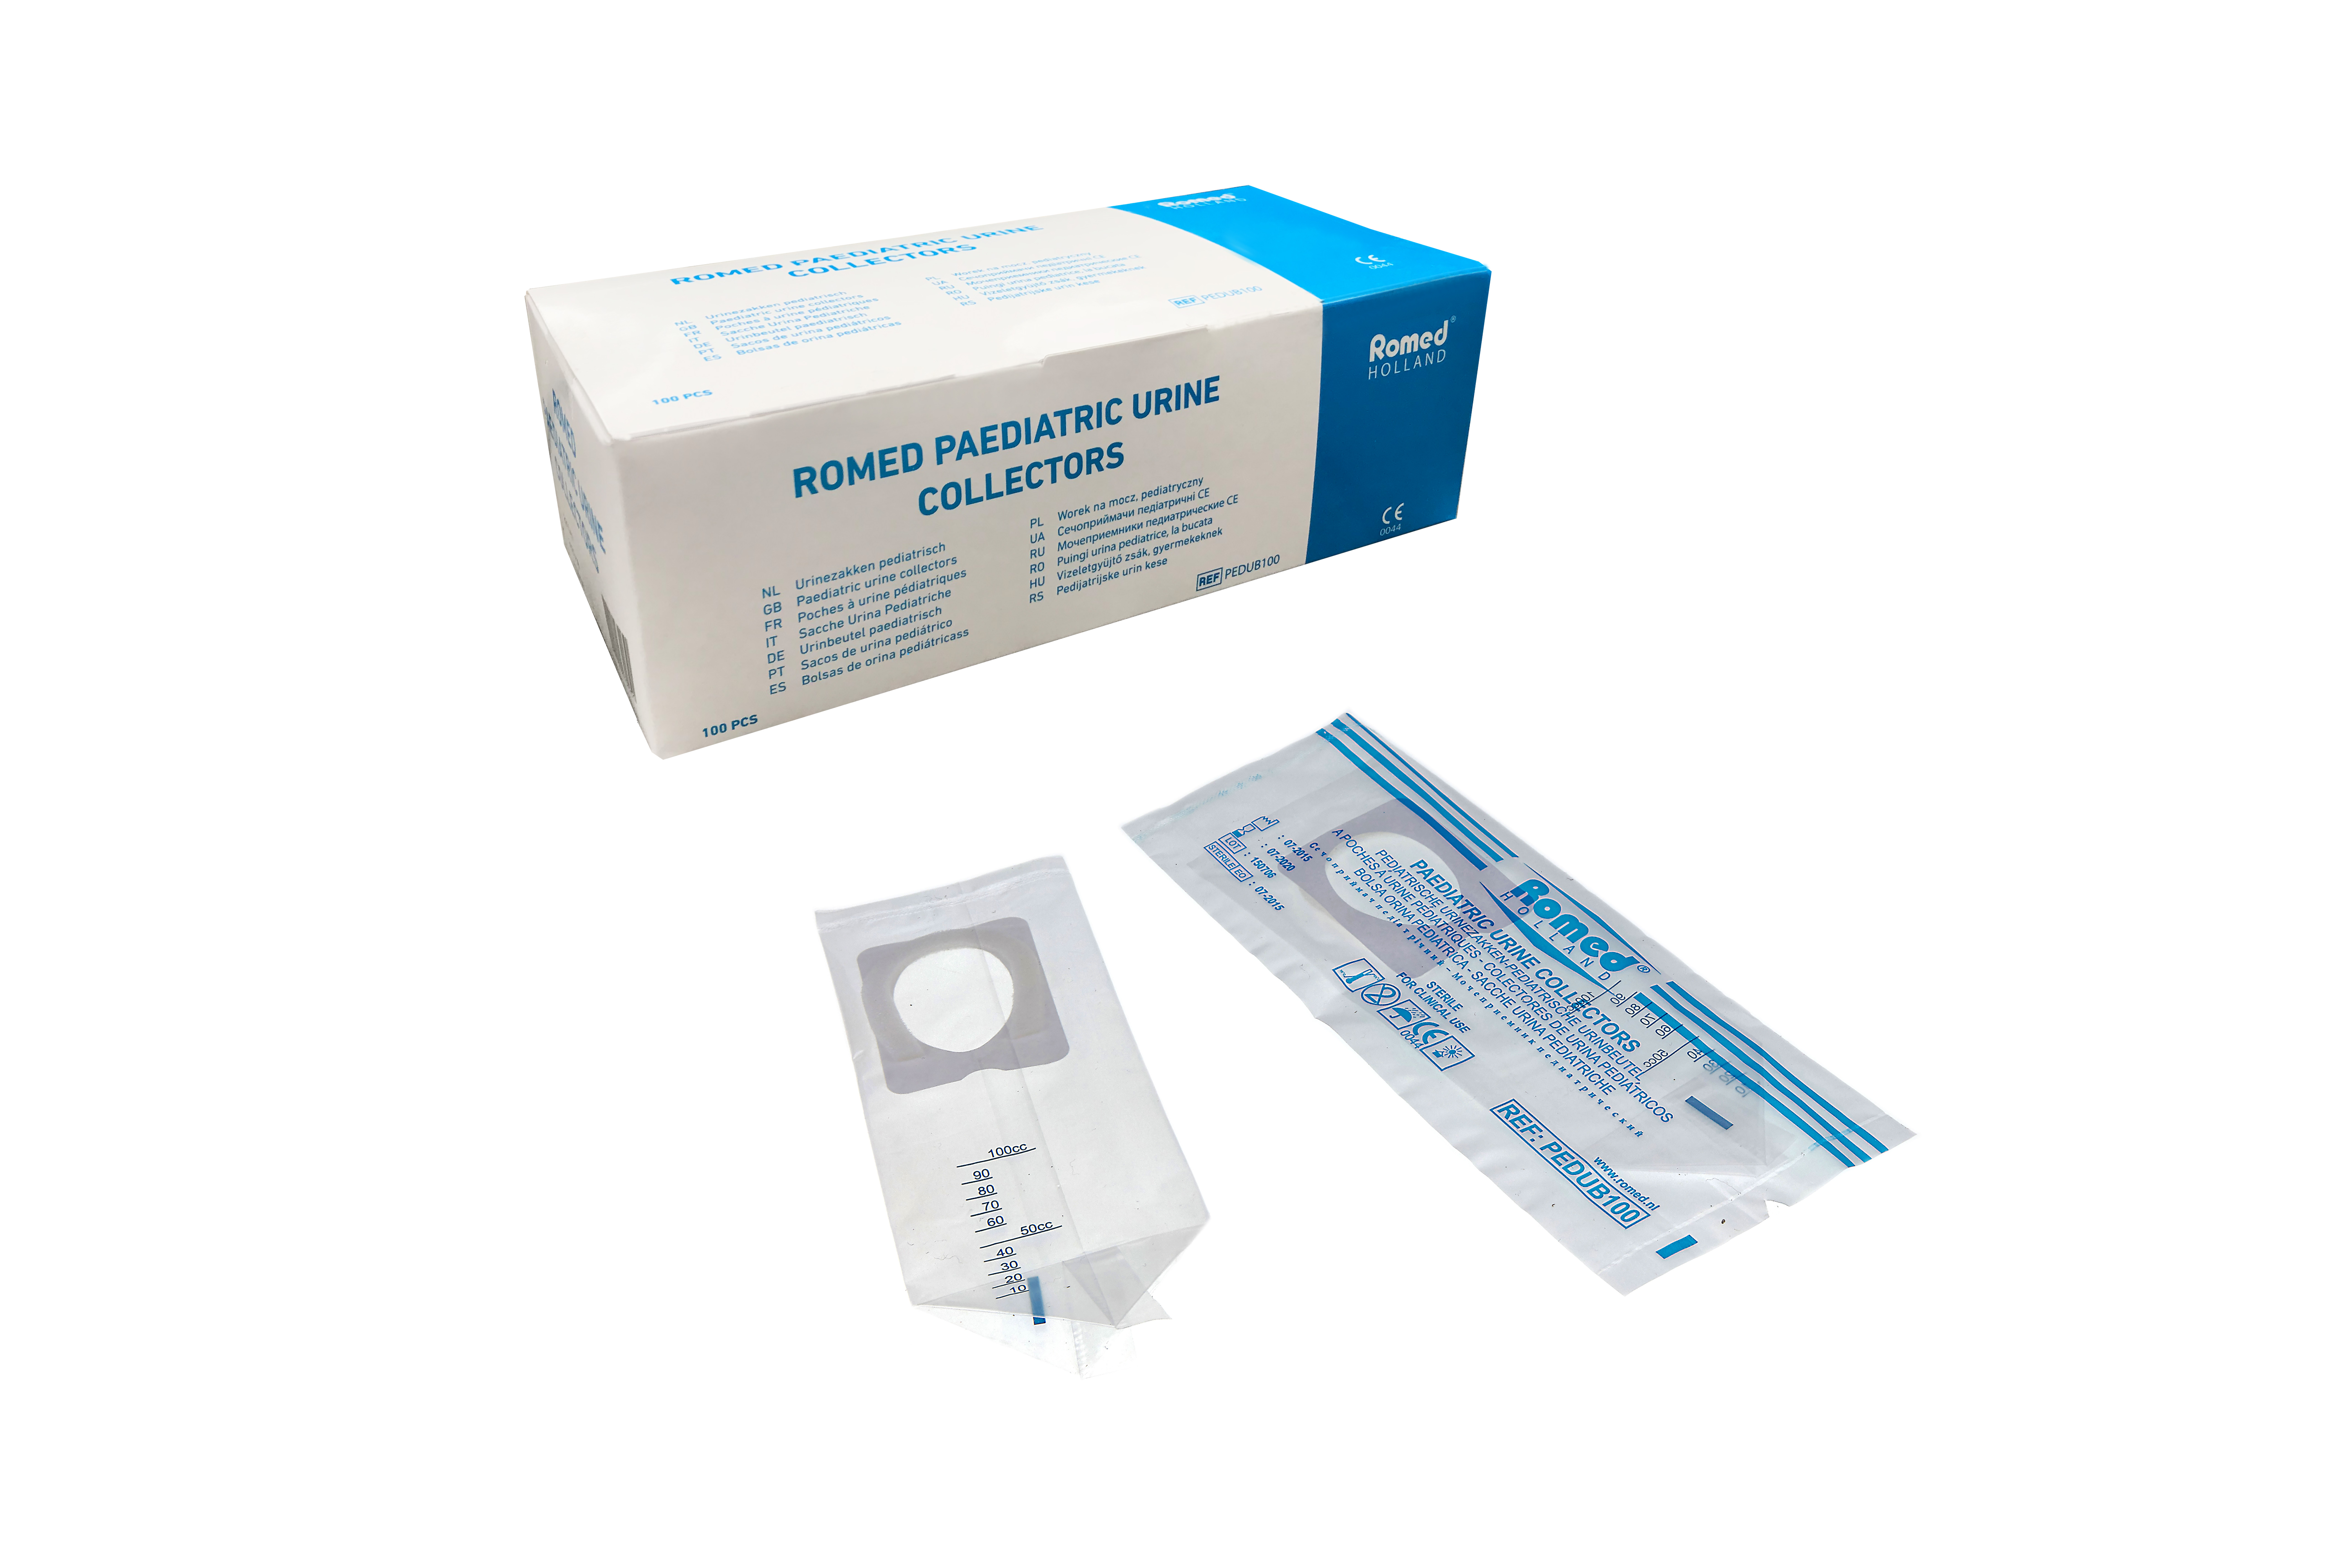 PEDUB100 Romed pediatric urine bags, sterile per piece in a polybag, 100 pcs in an inner box, 20 x 100 pcs = 2.000 pcs in a carton.